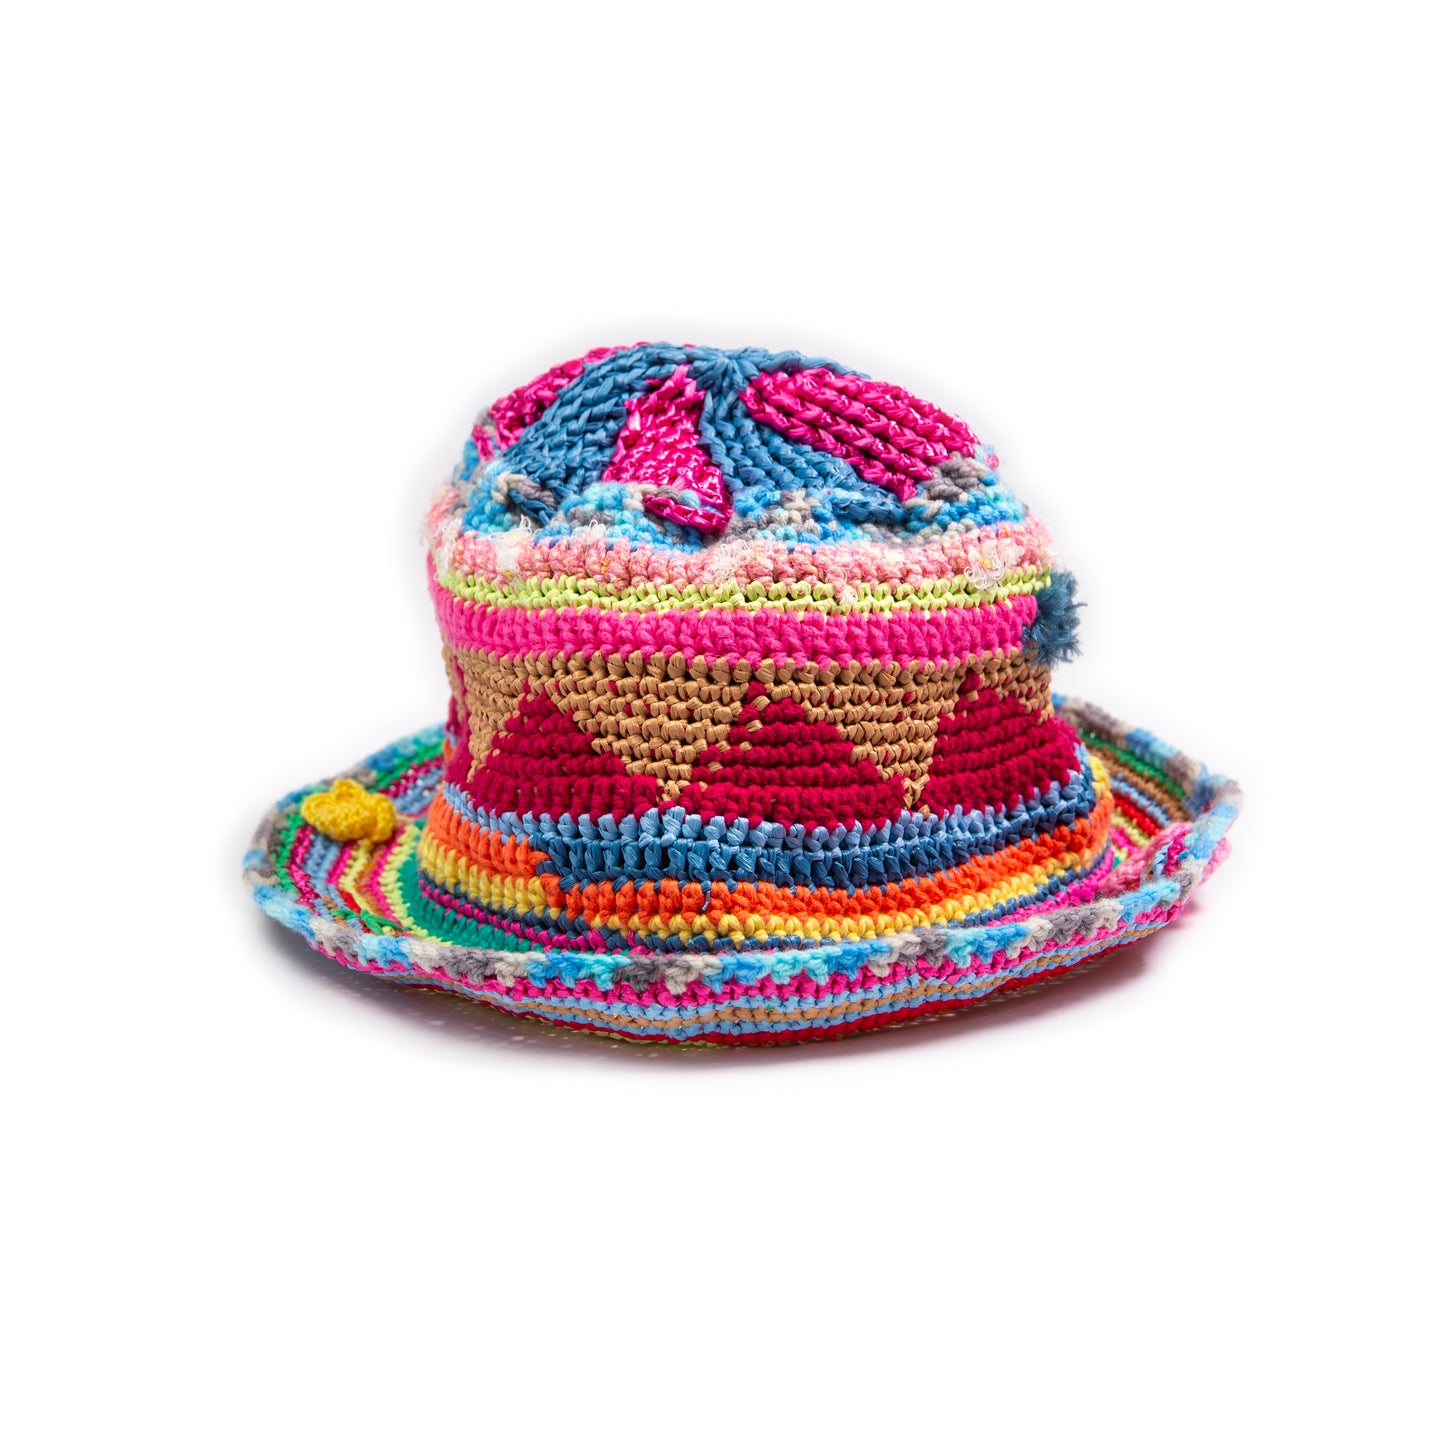 Triangle crochet hat